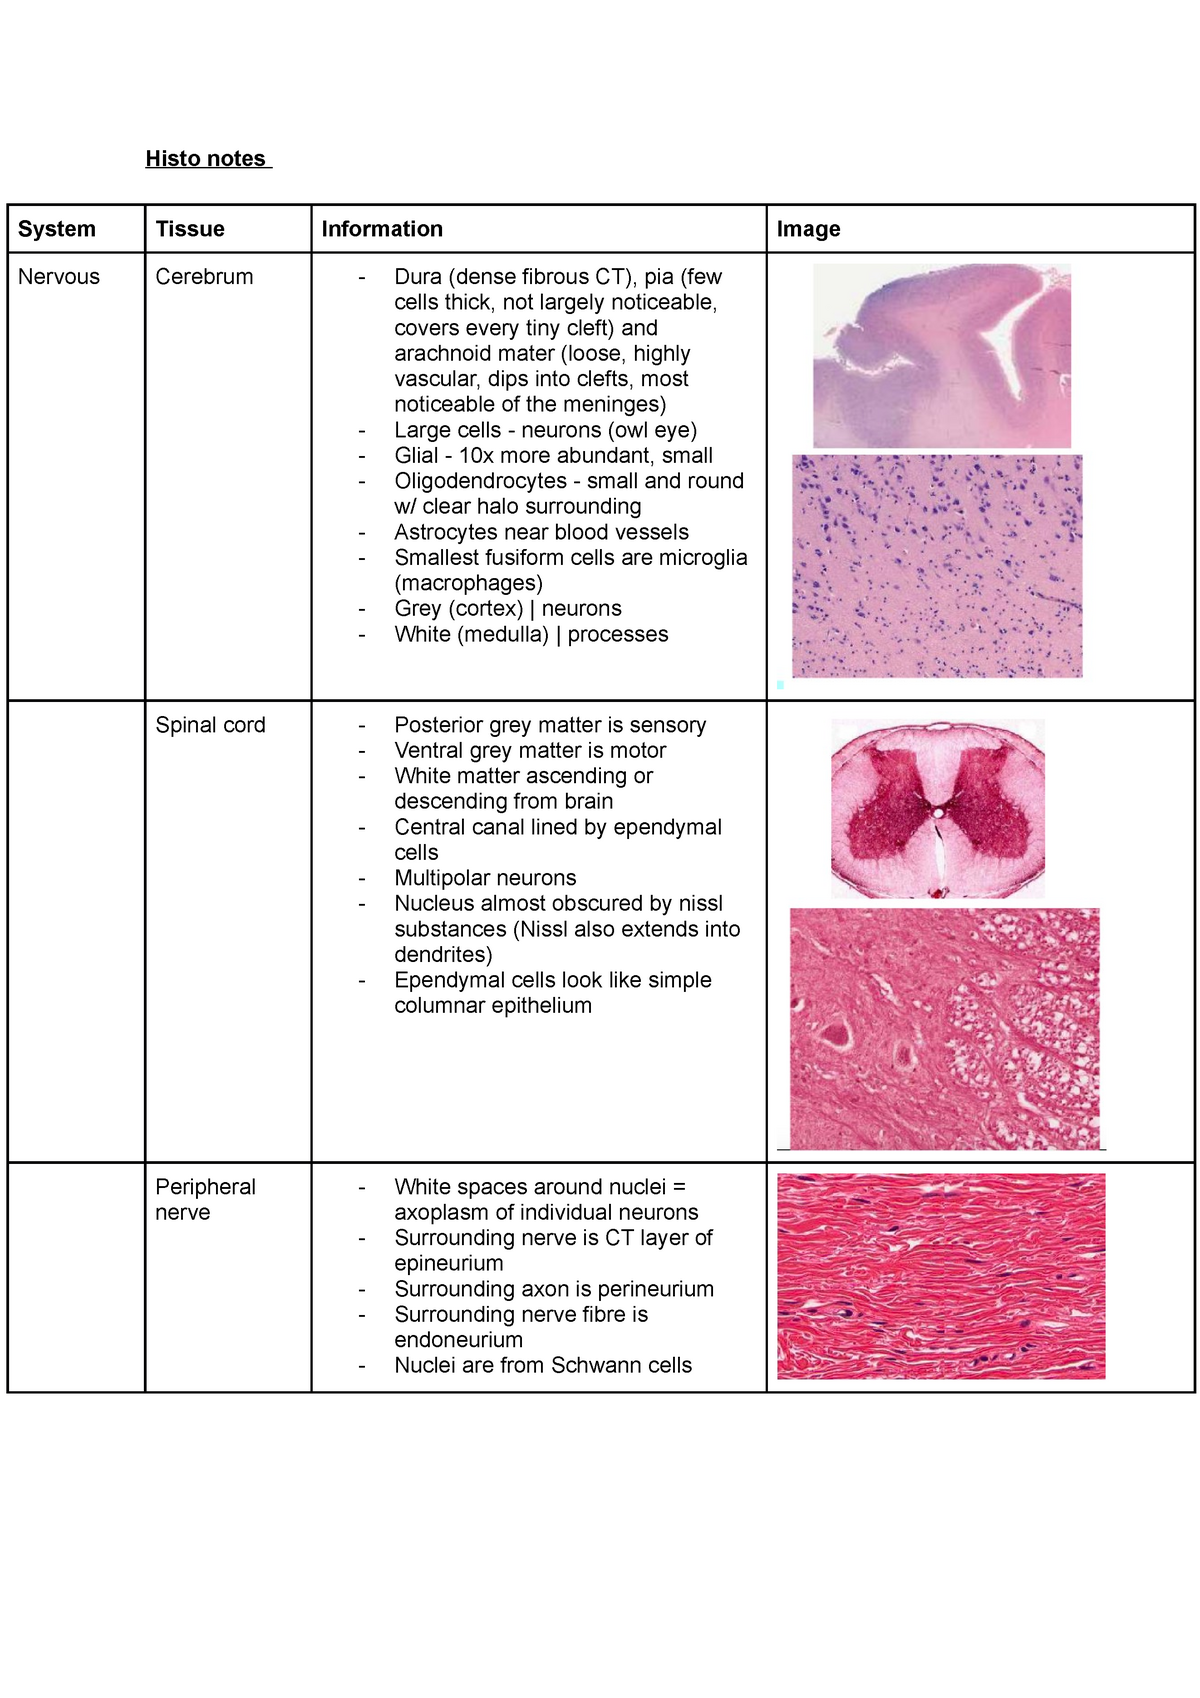 Histo prac exam notes - Histo notes System Tissue Nervous Cerebrum ...